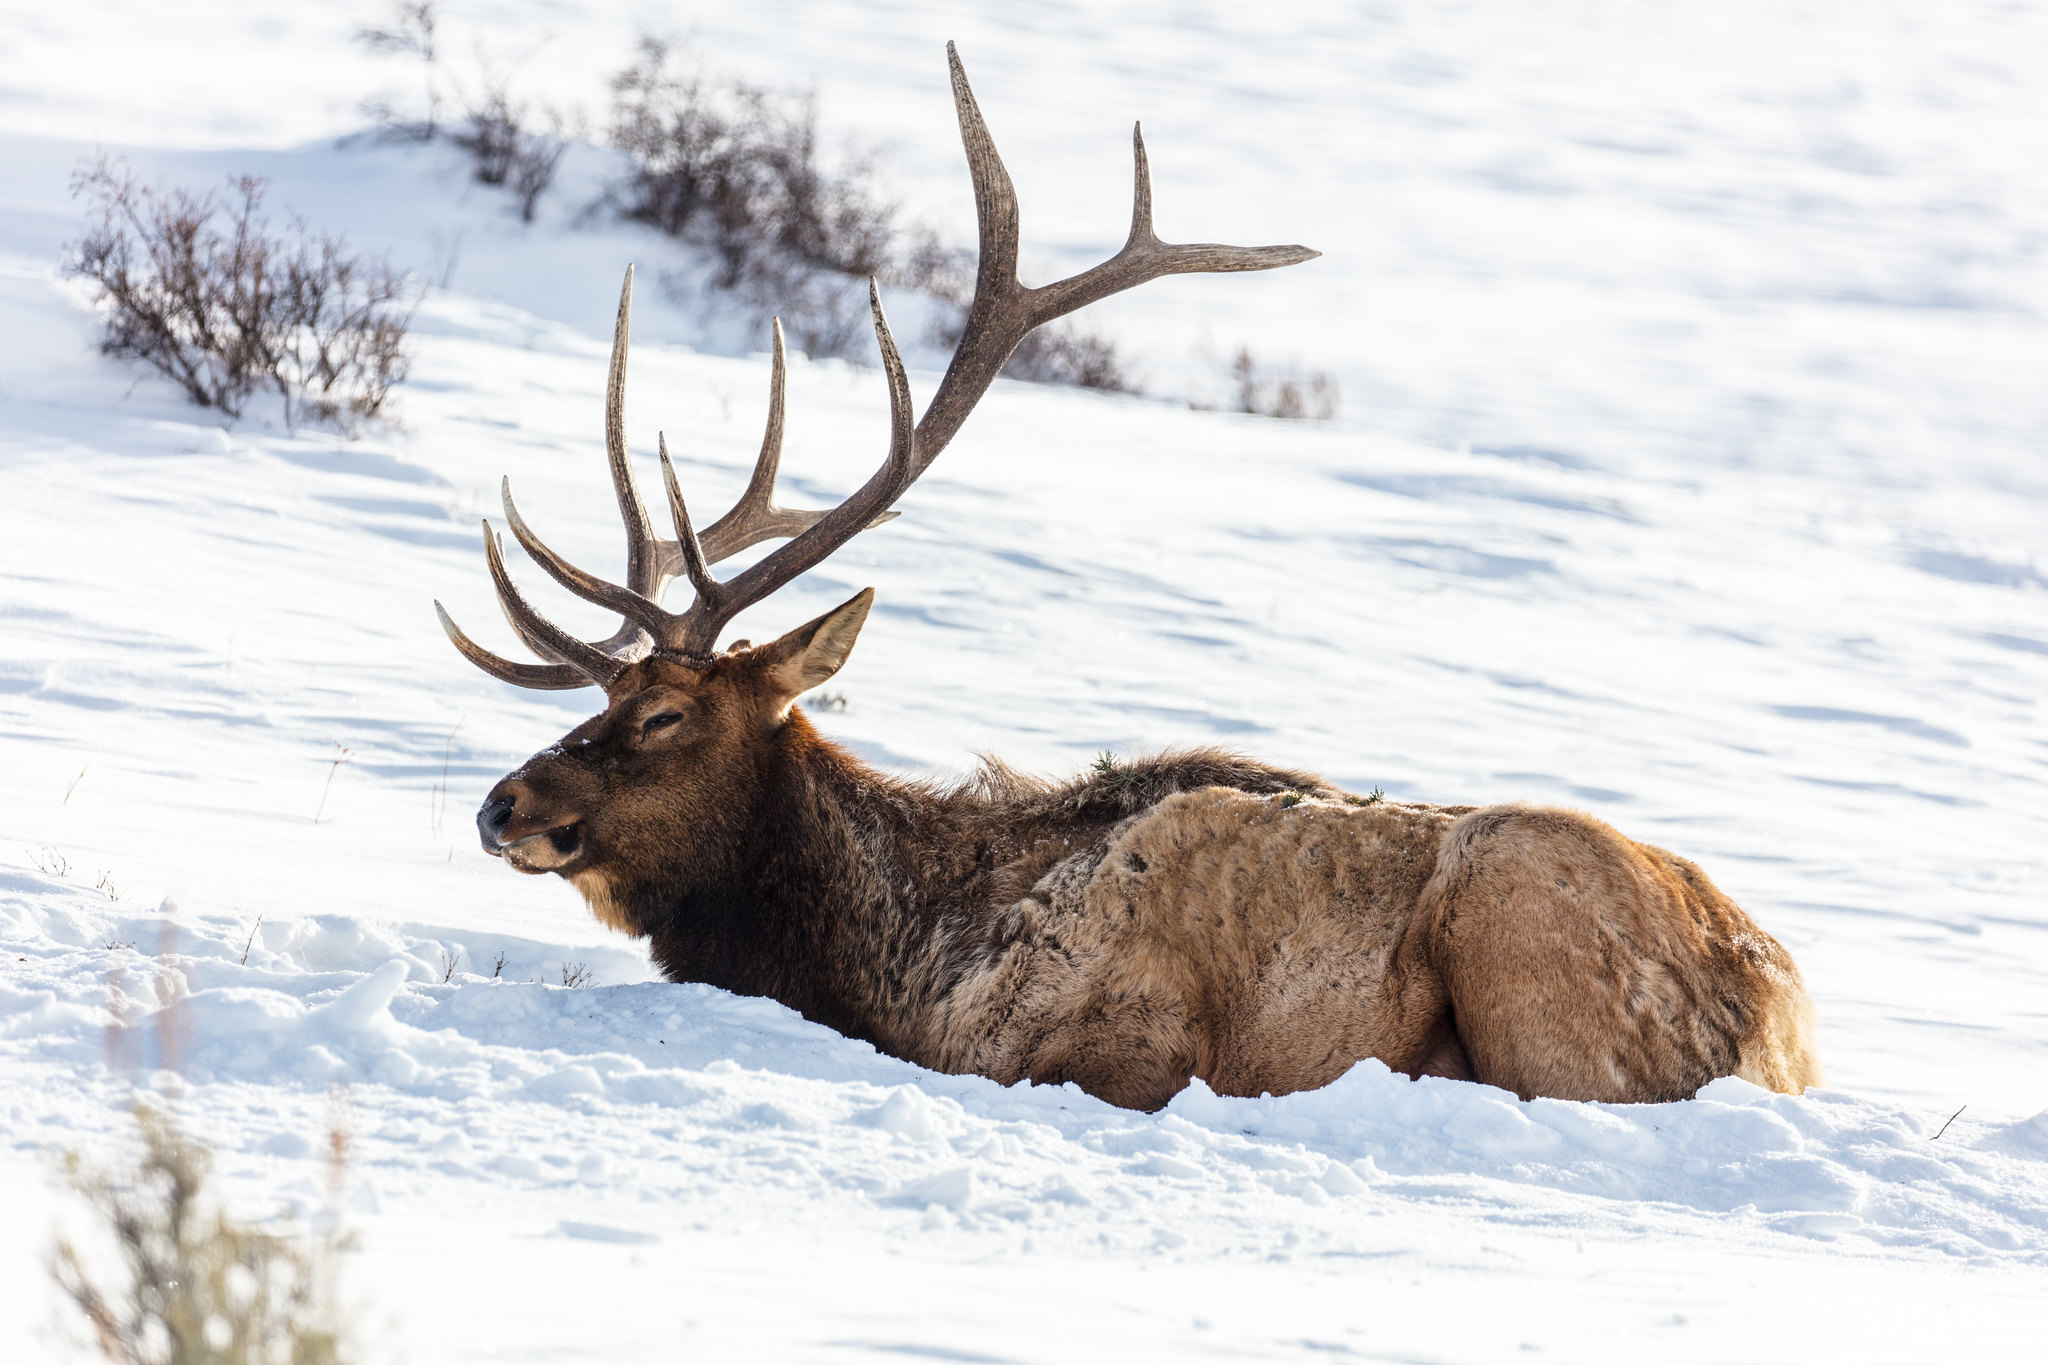 Two bull elk beheaded, one left paralyzed